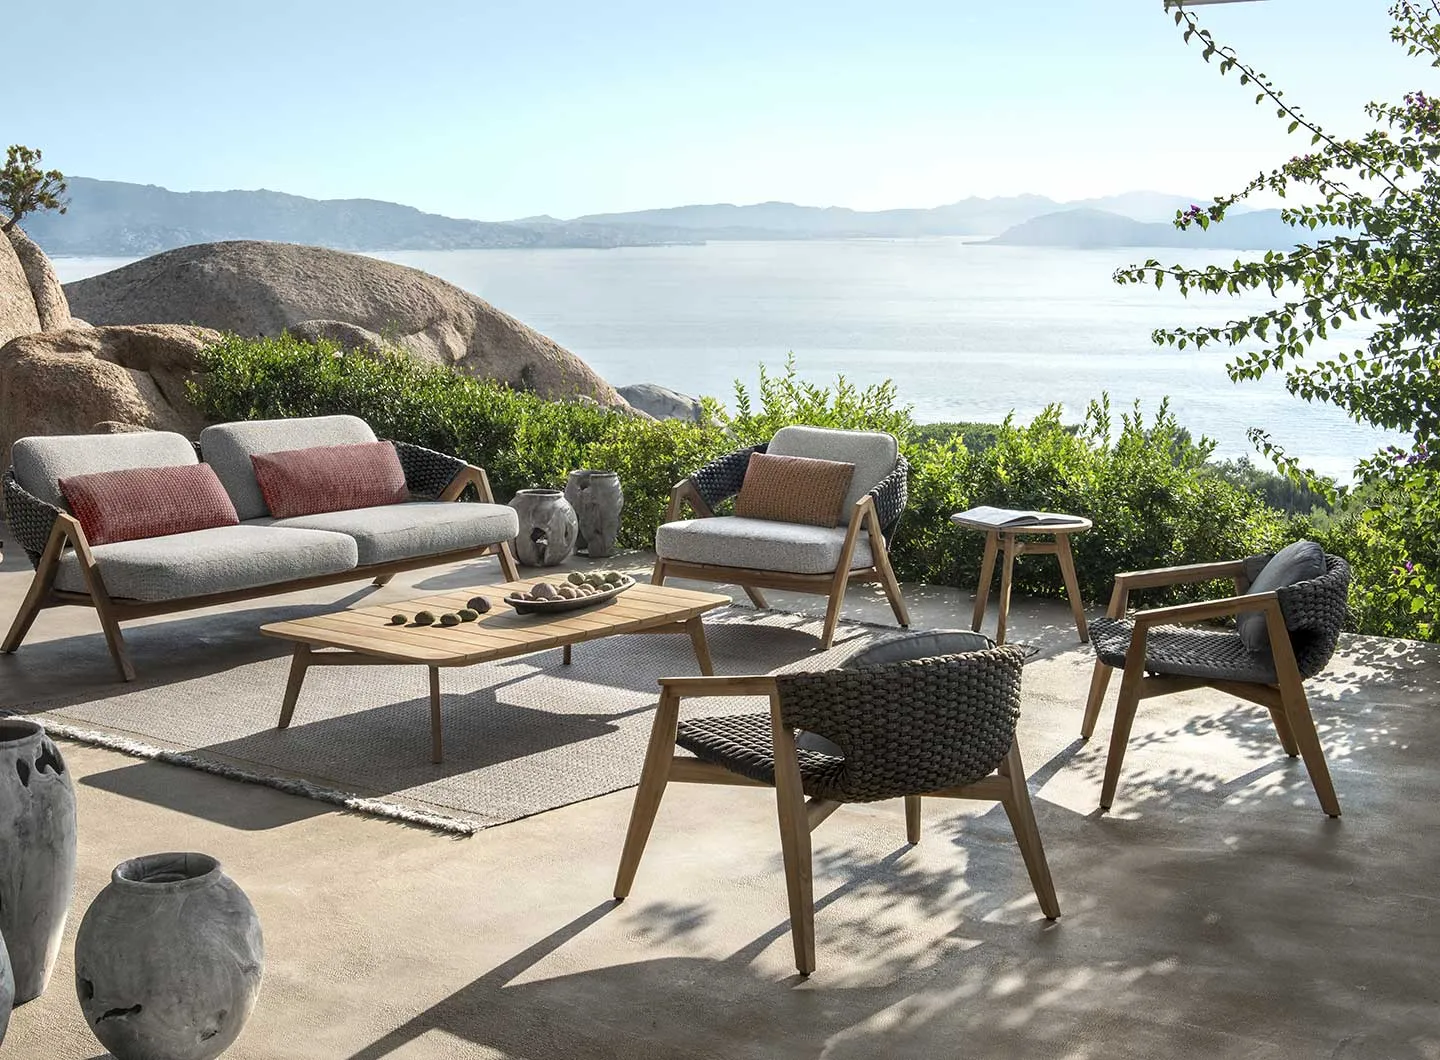 Ethimo - Knit lounge set, design by Patrick Norguet